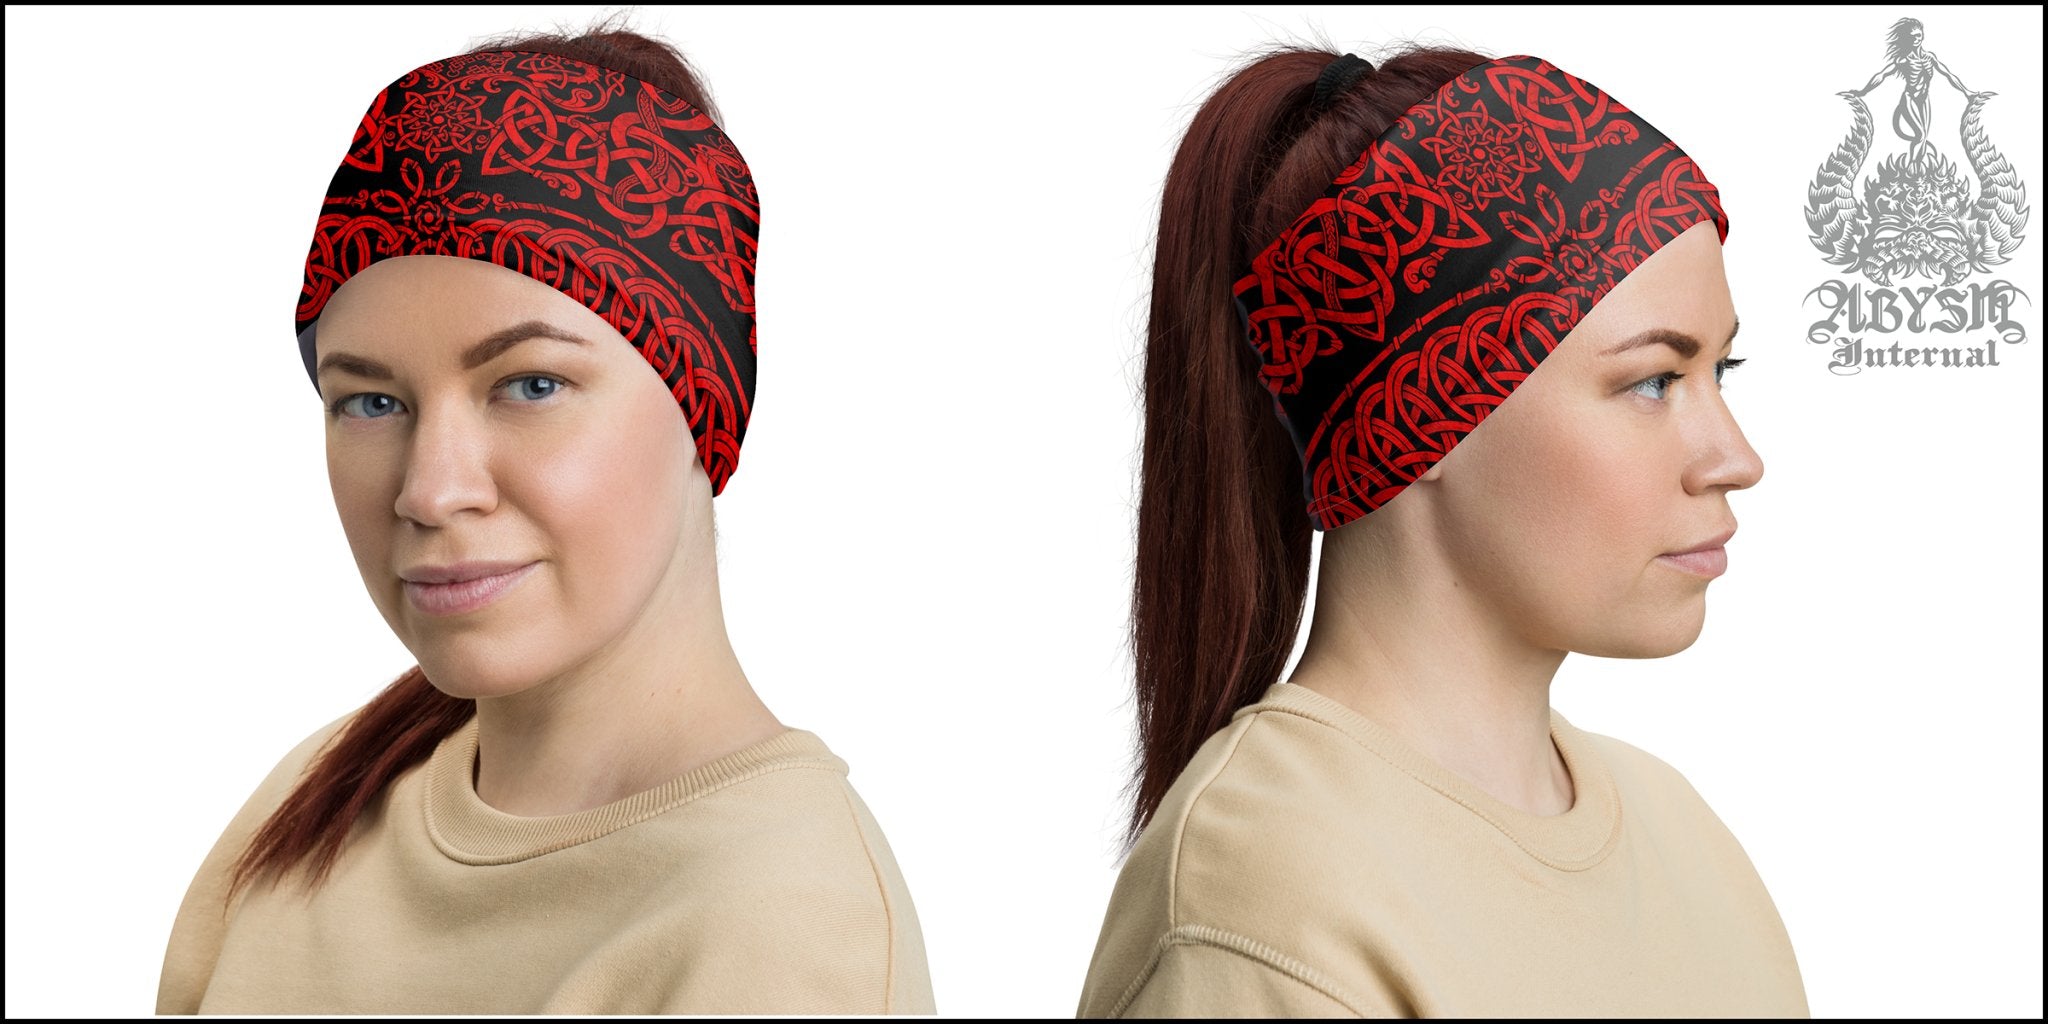 Viking Neck Gaiter, Face Mask, Printed Head Covering, Dragon Fafnir, Nordic Art - Black & Red - Abysm Internal